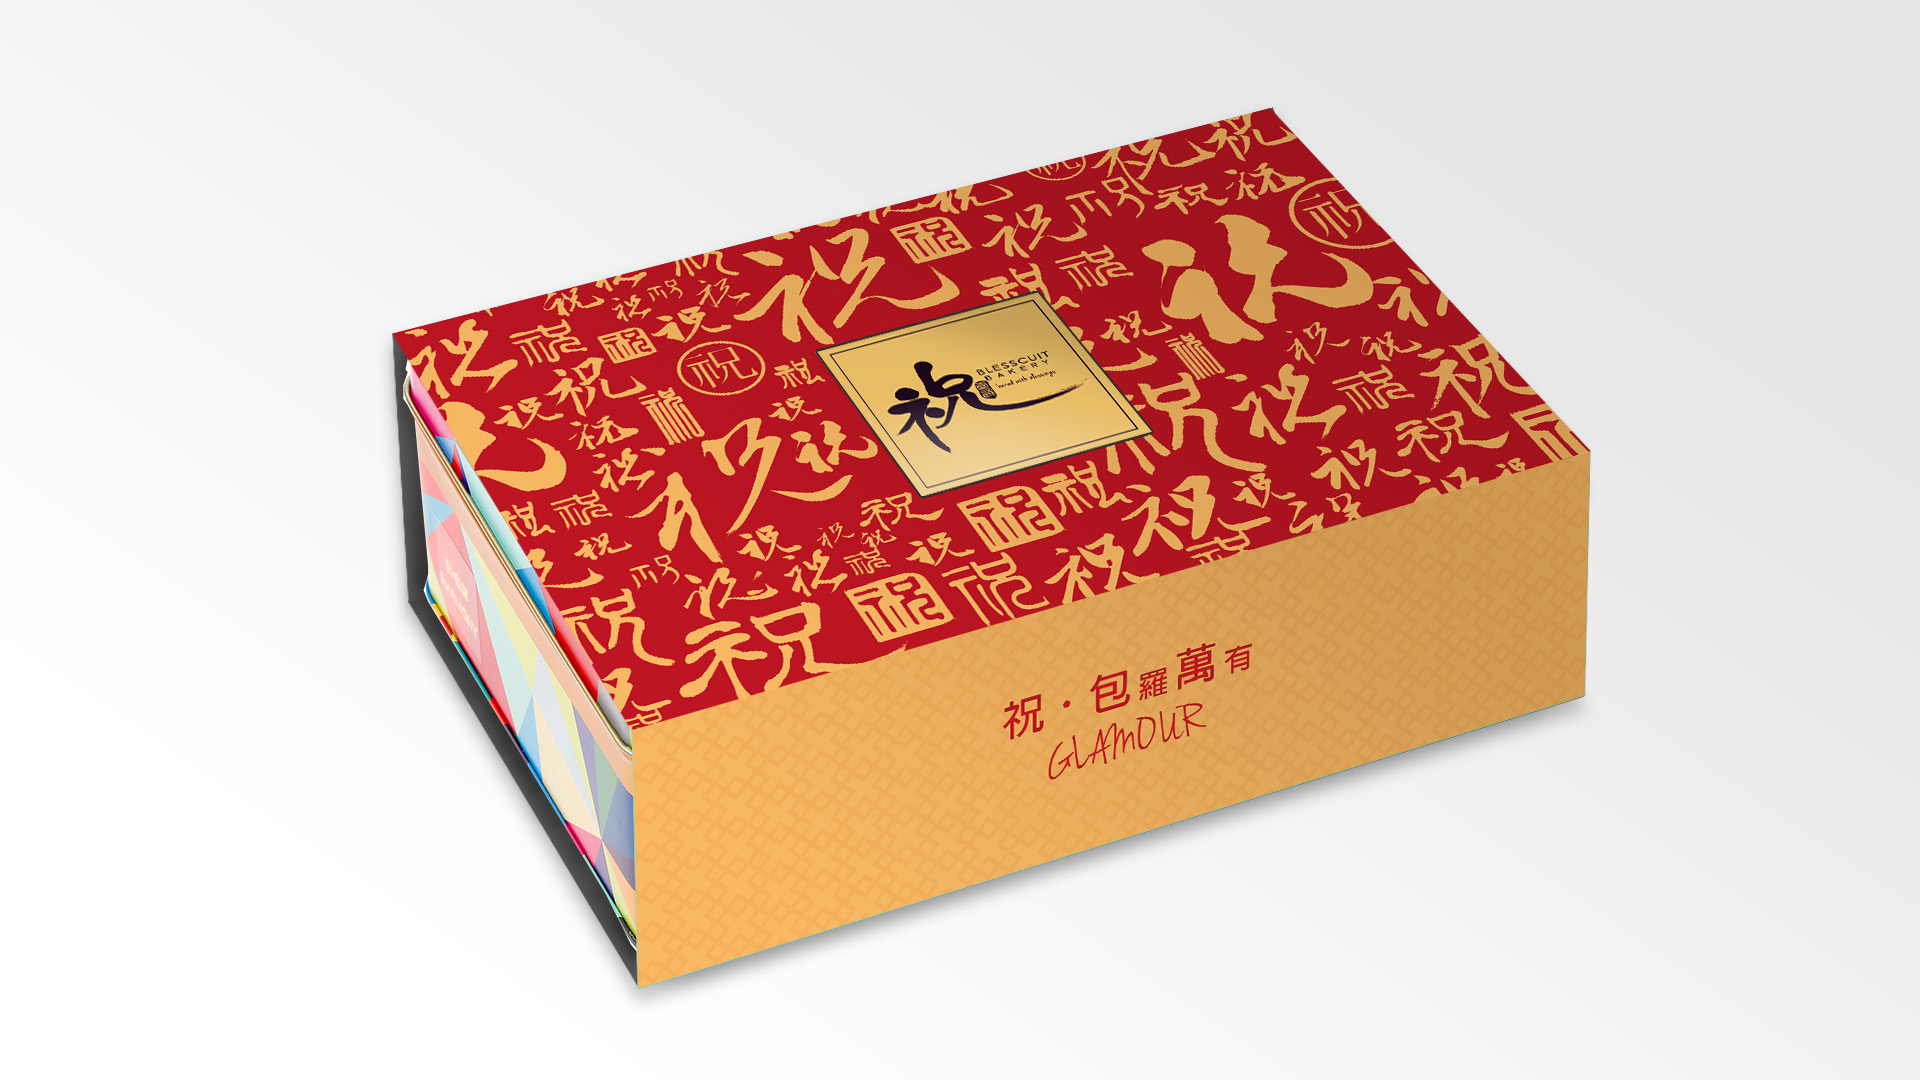 D2 Studio 市場營銷策劃, 品牌策劃與平面設計公司的香港及廣州中國團隊為cookies brand安排平面設計與企業雜誌設計packaging design and gift design 3